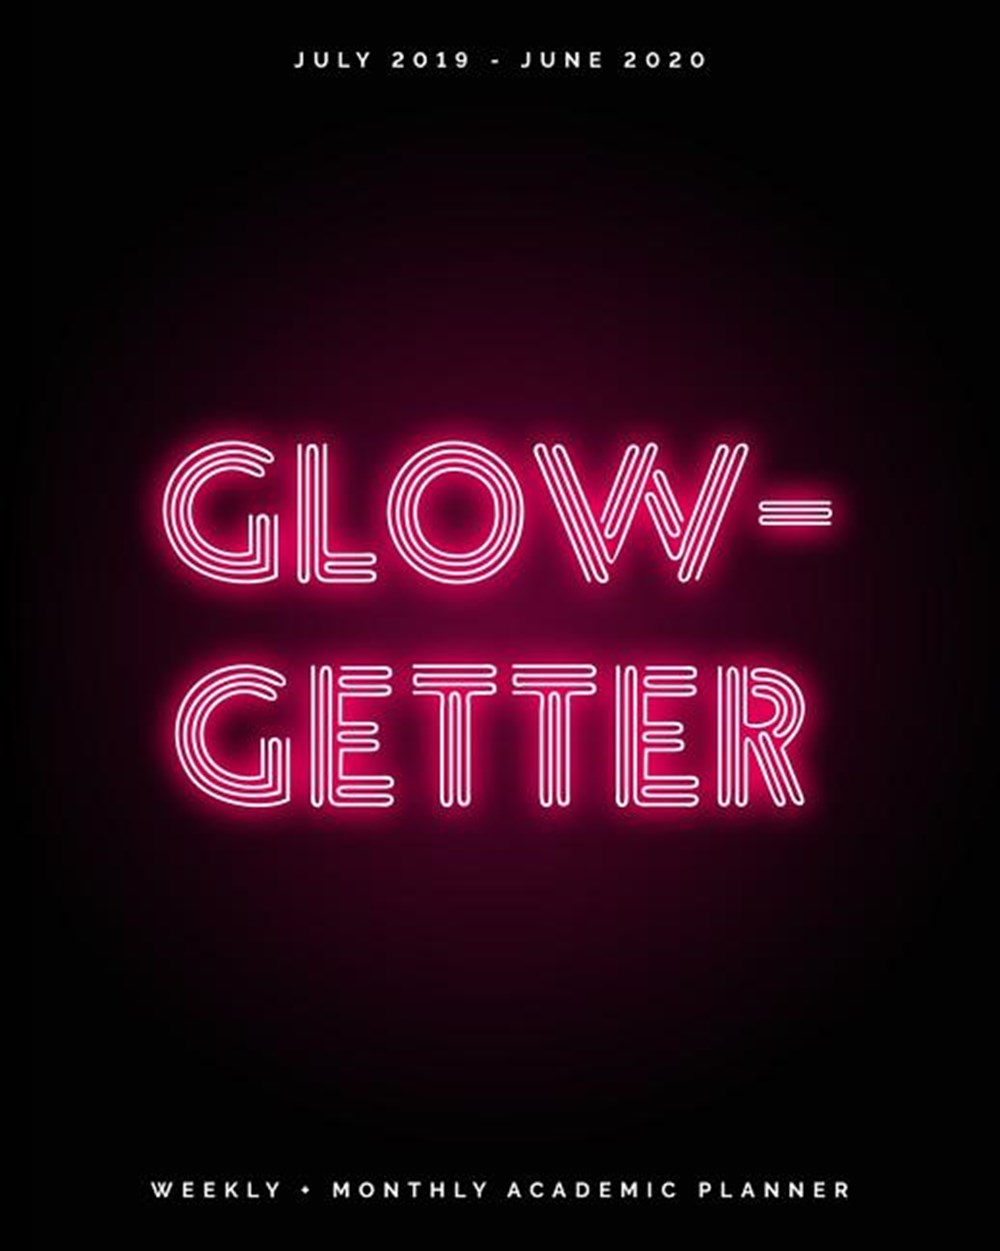 Glow-Getter July 2019 - June 2020 - Weekly + Monthly Academic Planner: Hot Pink Neon Lights - Agenda